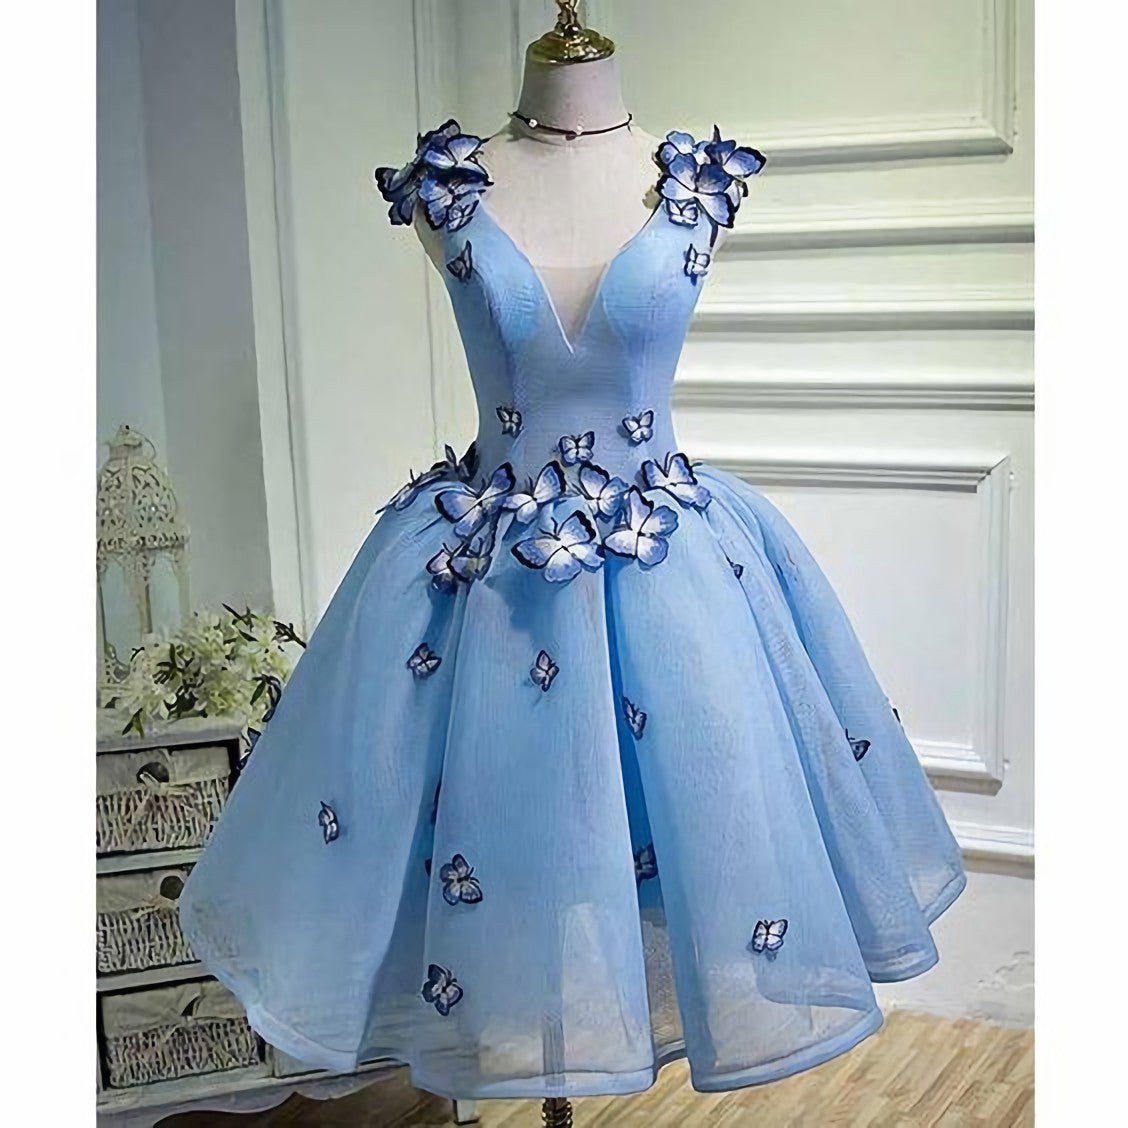 Prom Dress Long Elegent, Sky Blue Butterfly Short Homecoming Dress, Party Dresses